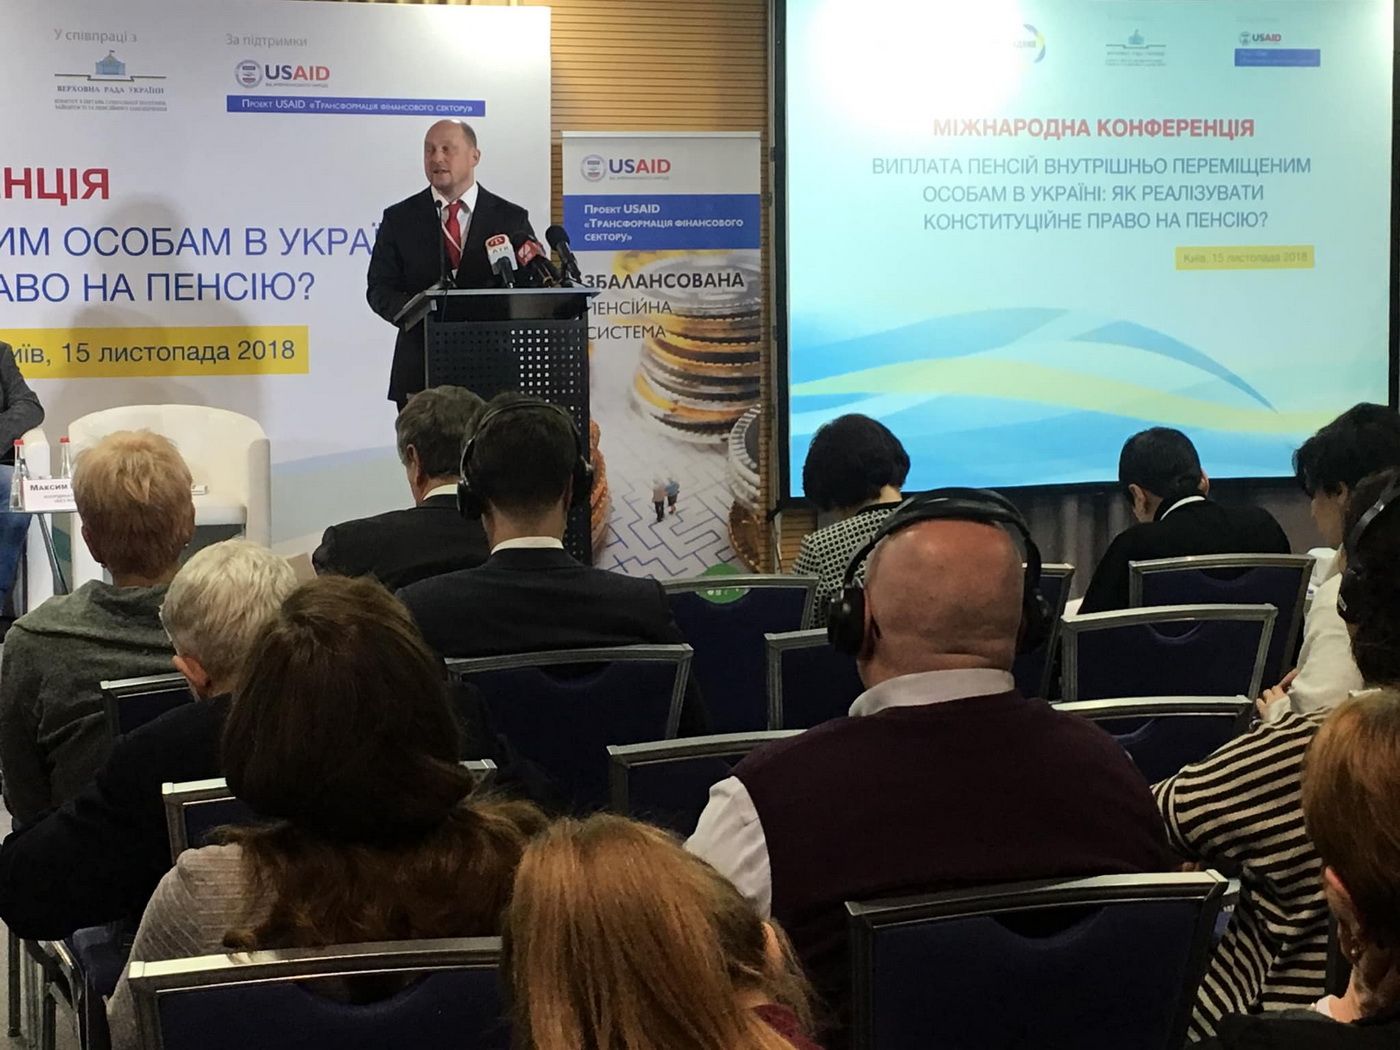 18 12 2018 Kyiv kaplin konferencia pensia